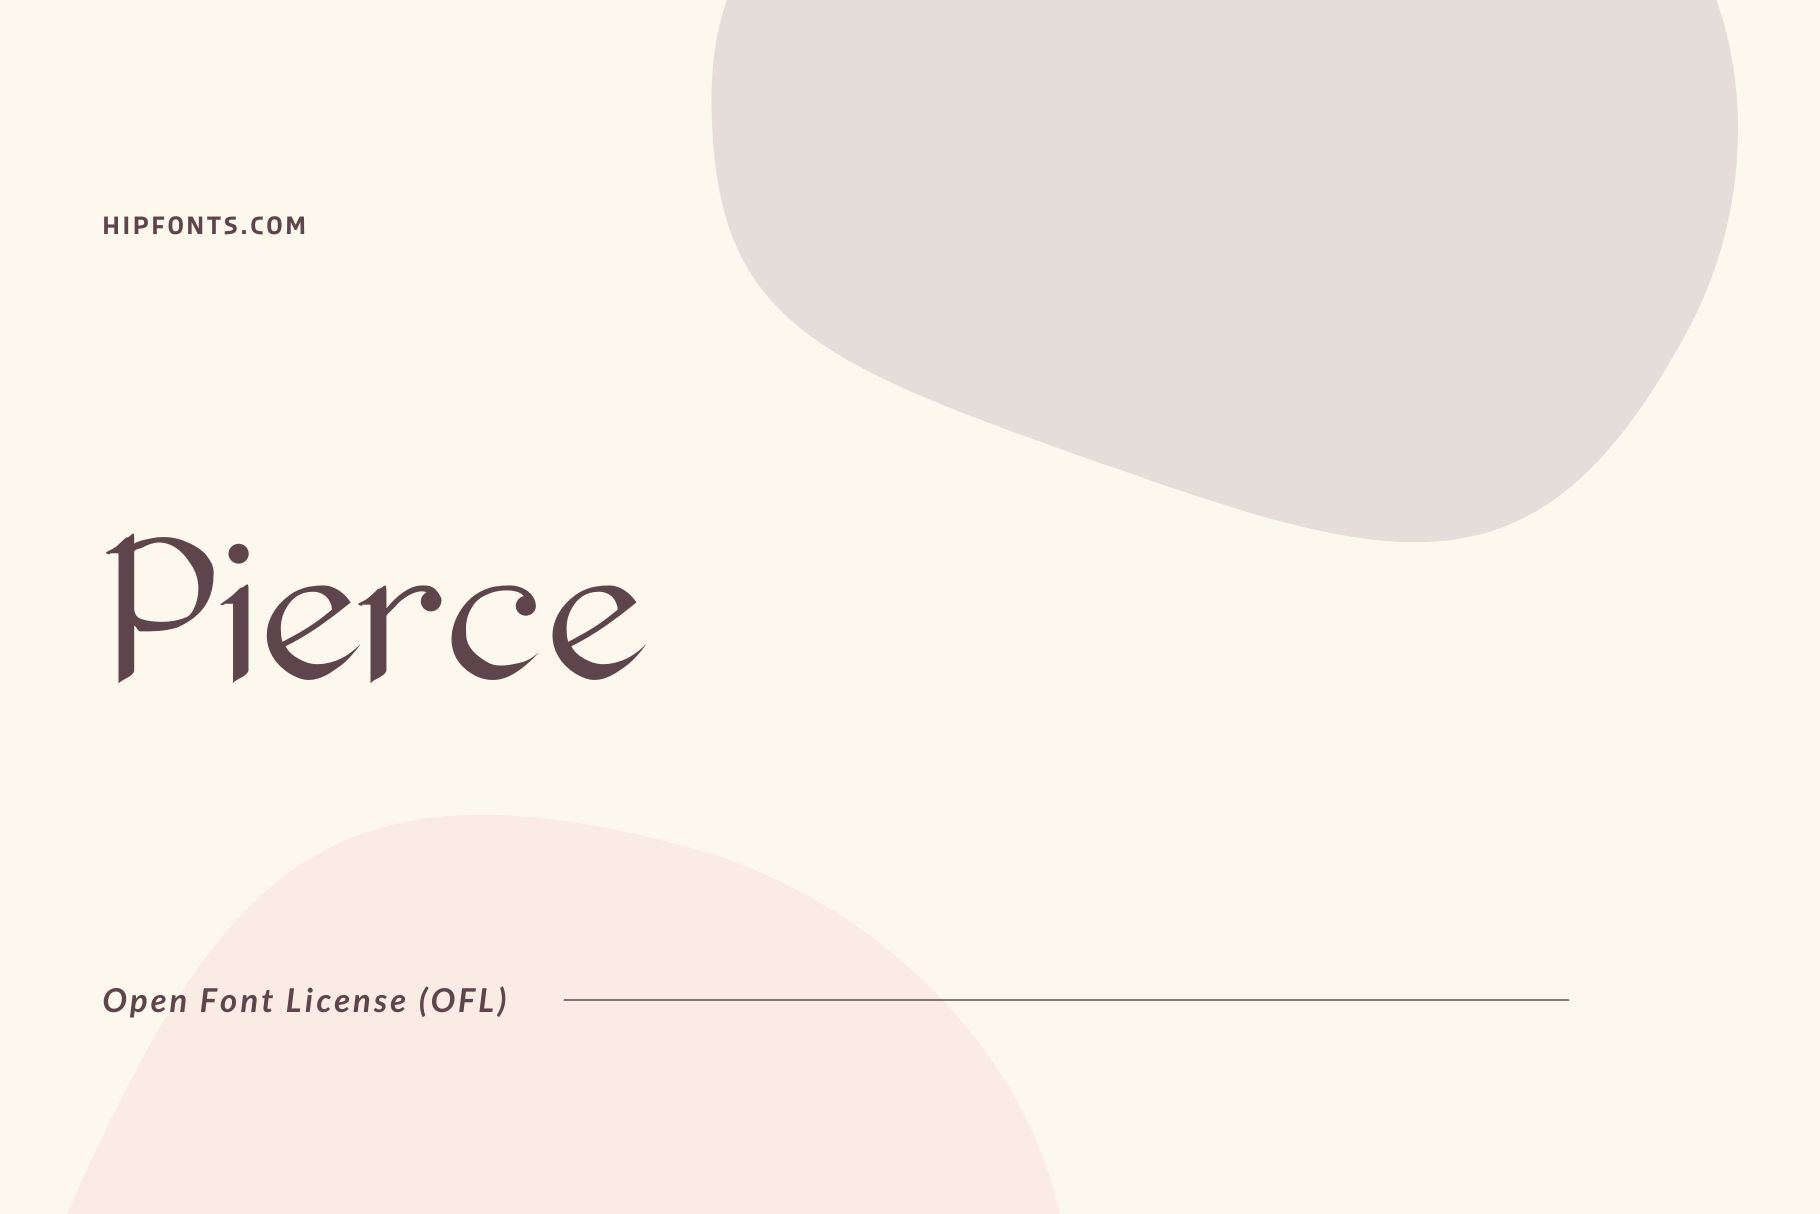 Pierce free font